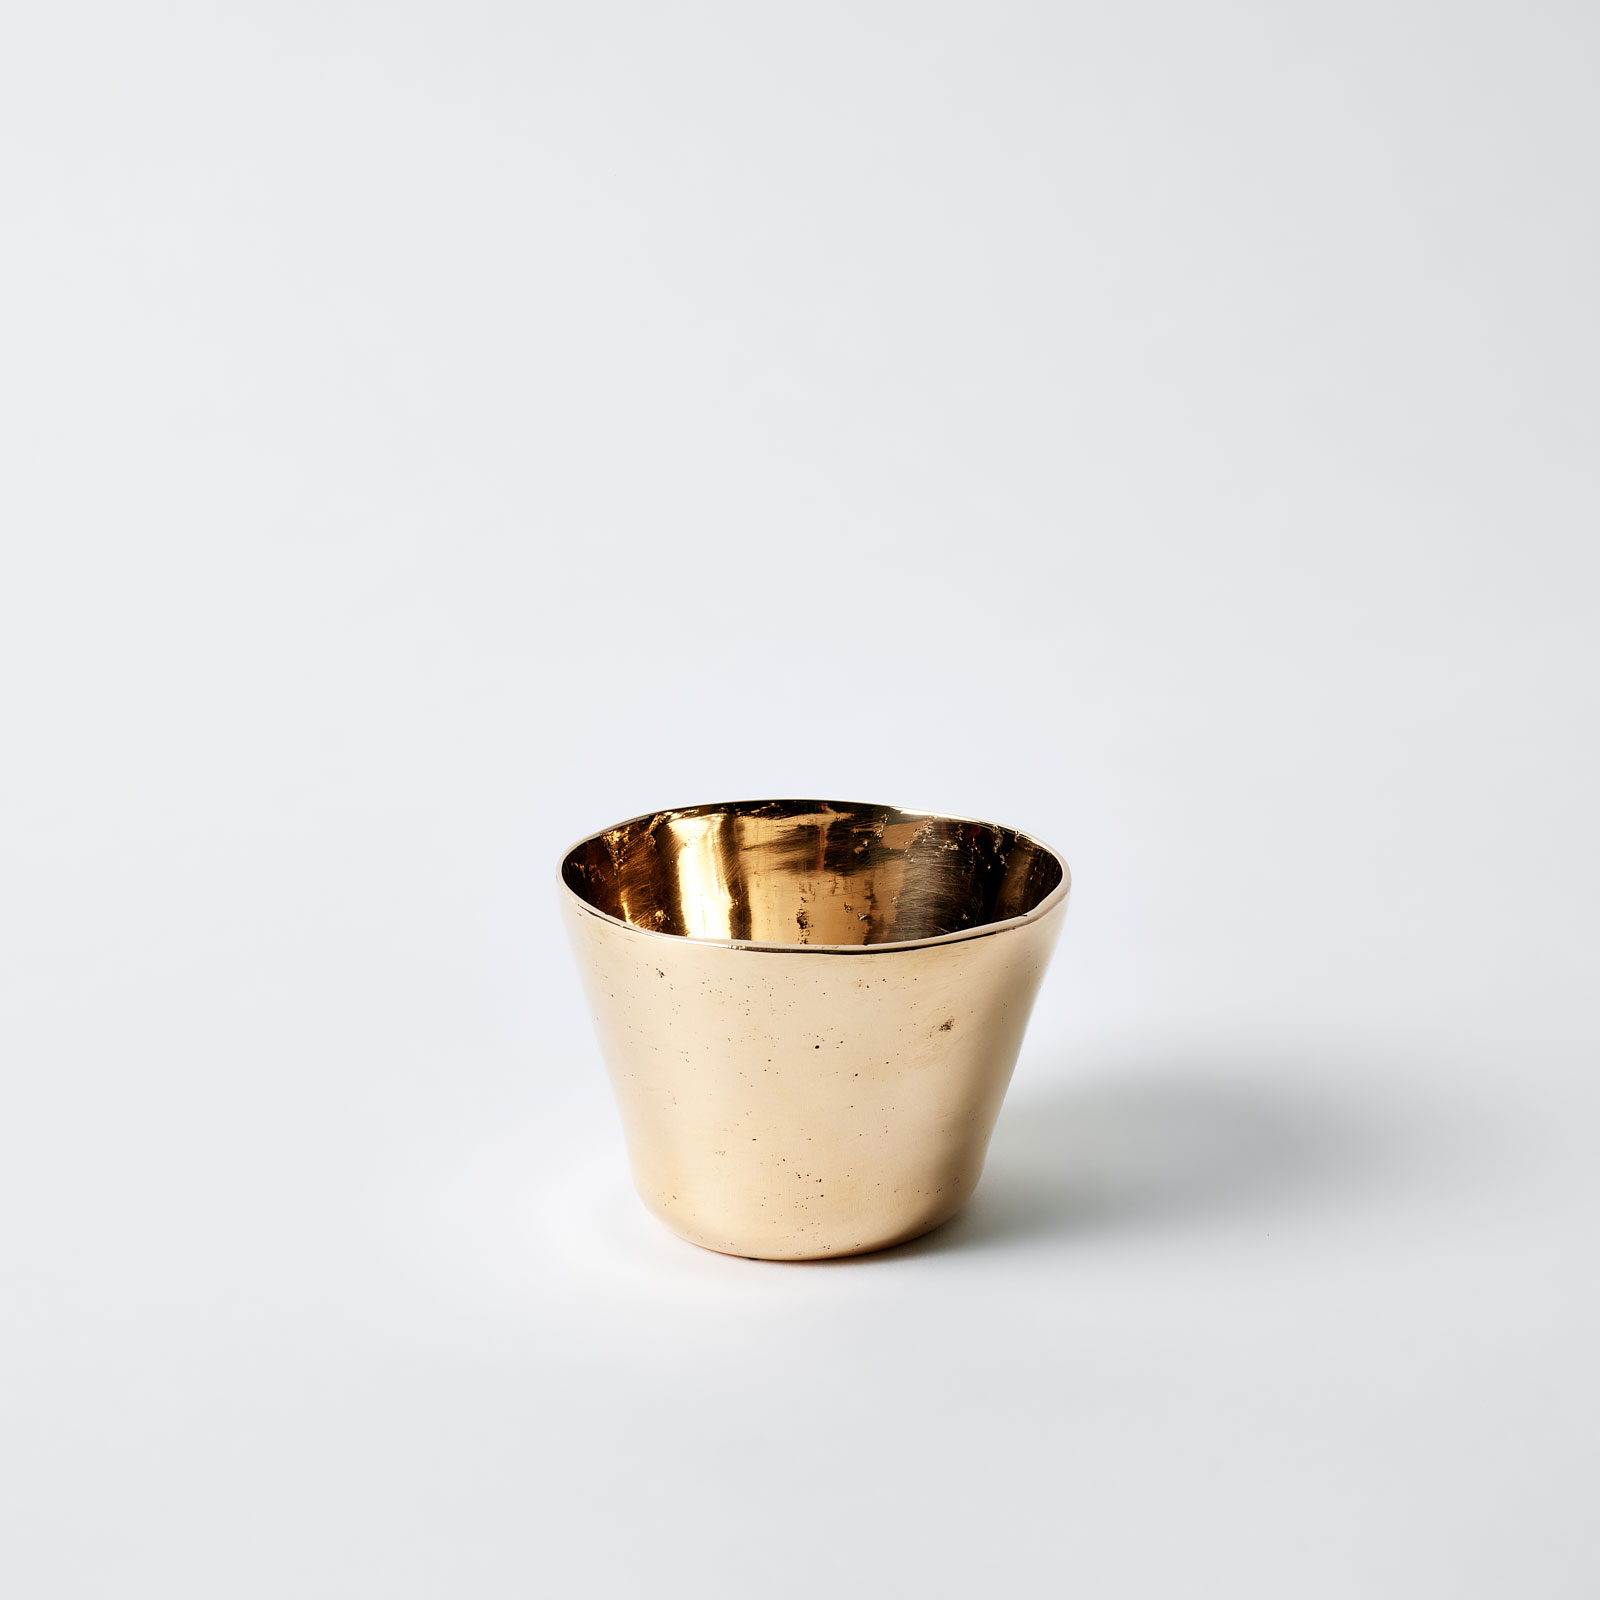 Cast bronze cup